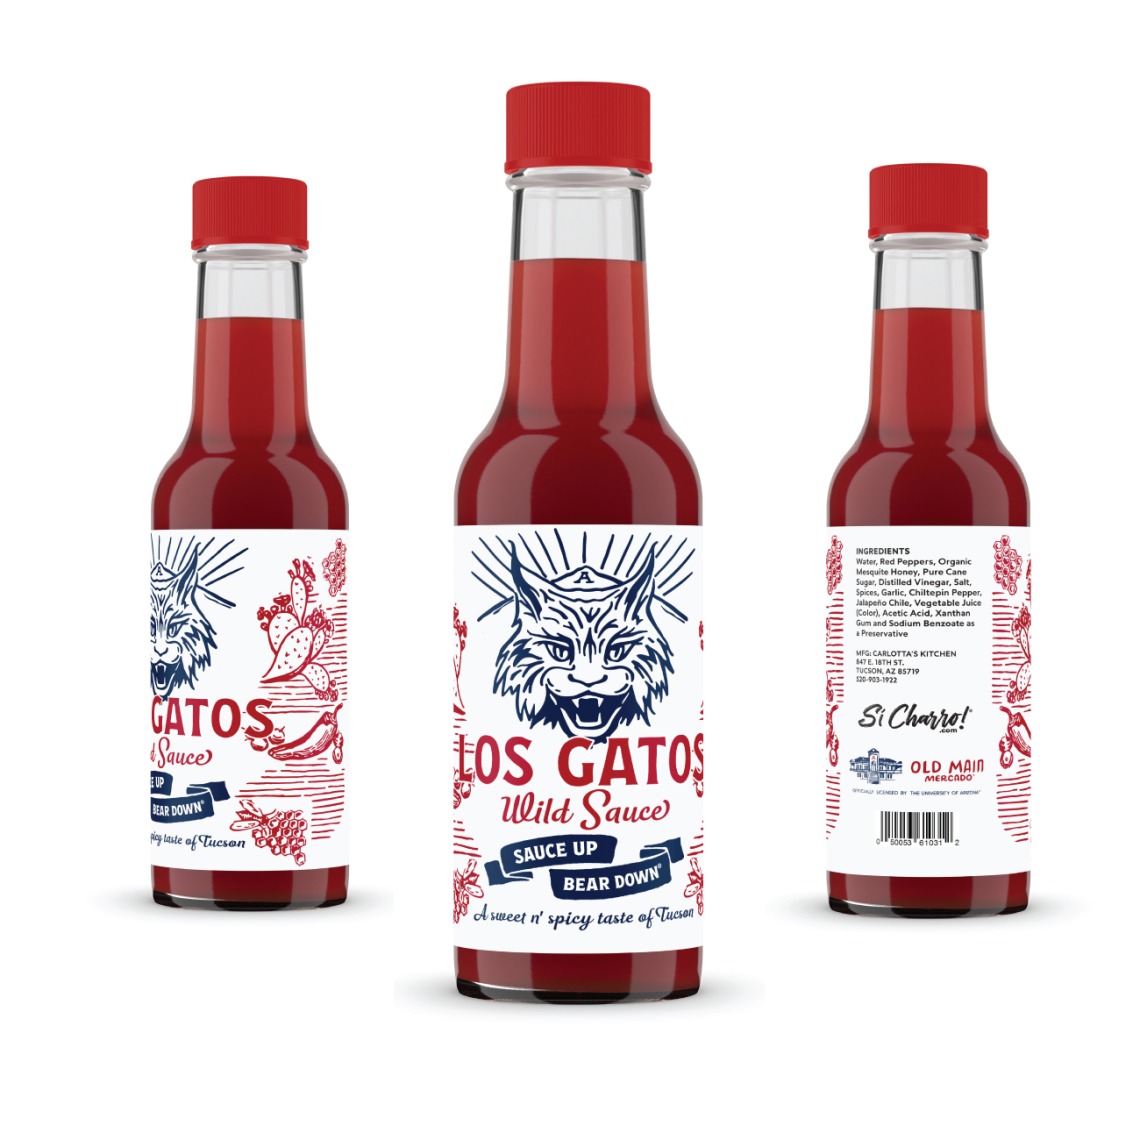 El Charro hot sauce bottle product image